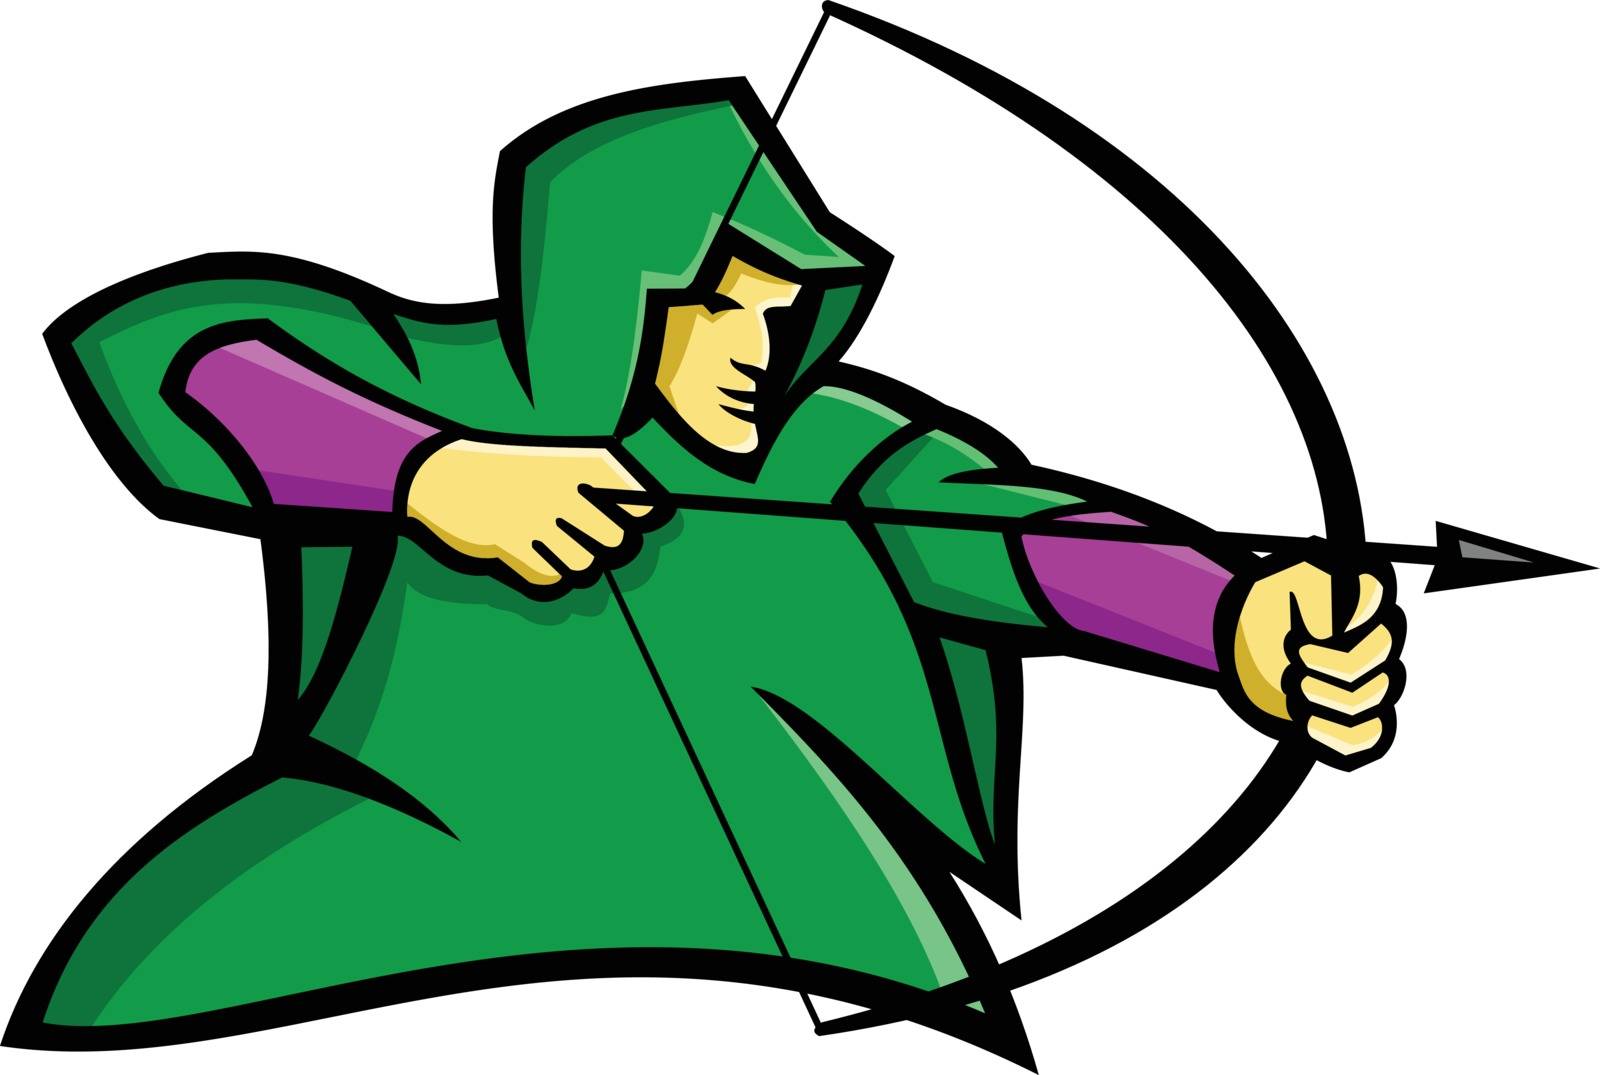 Medieval Archer Mascot by patrimonio